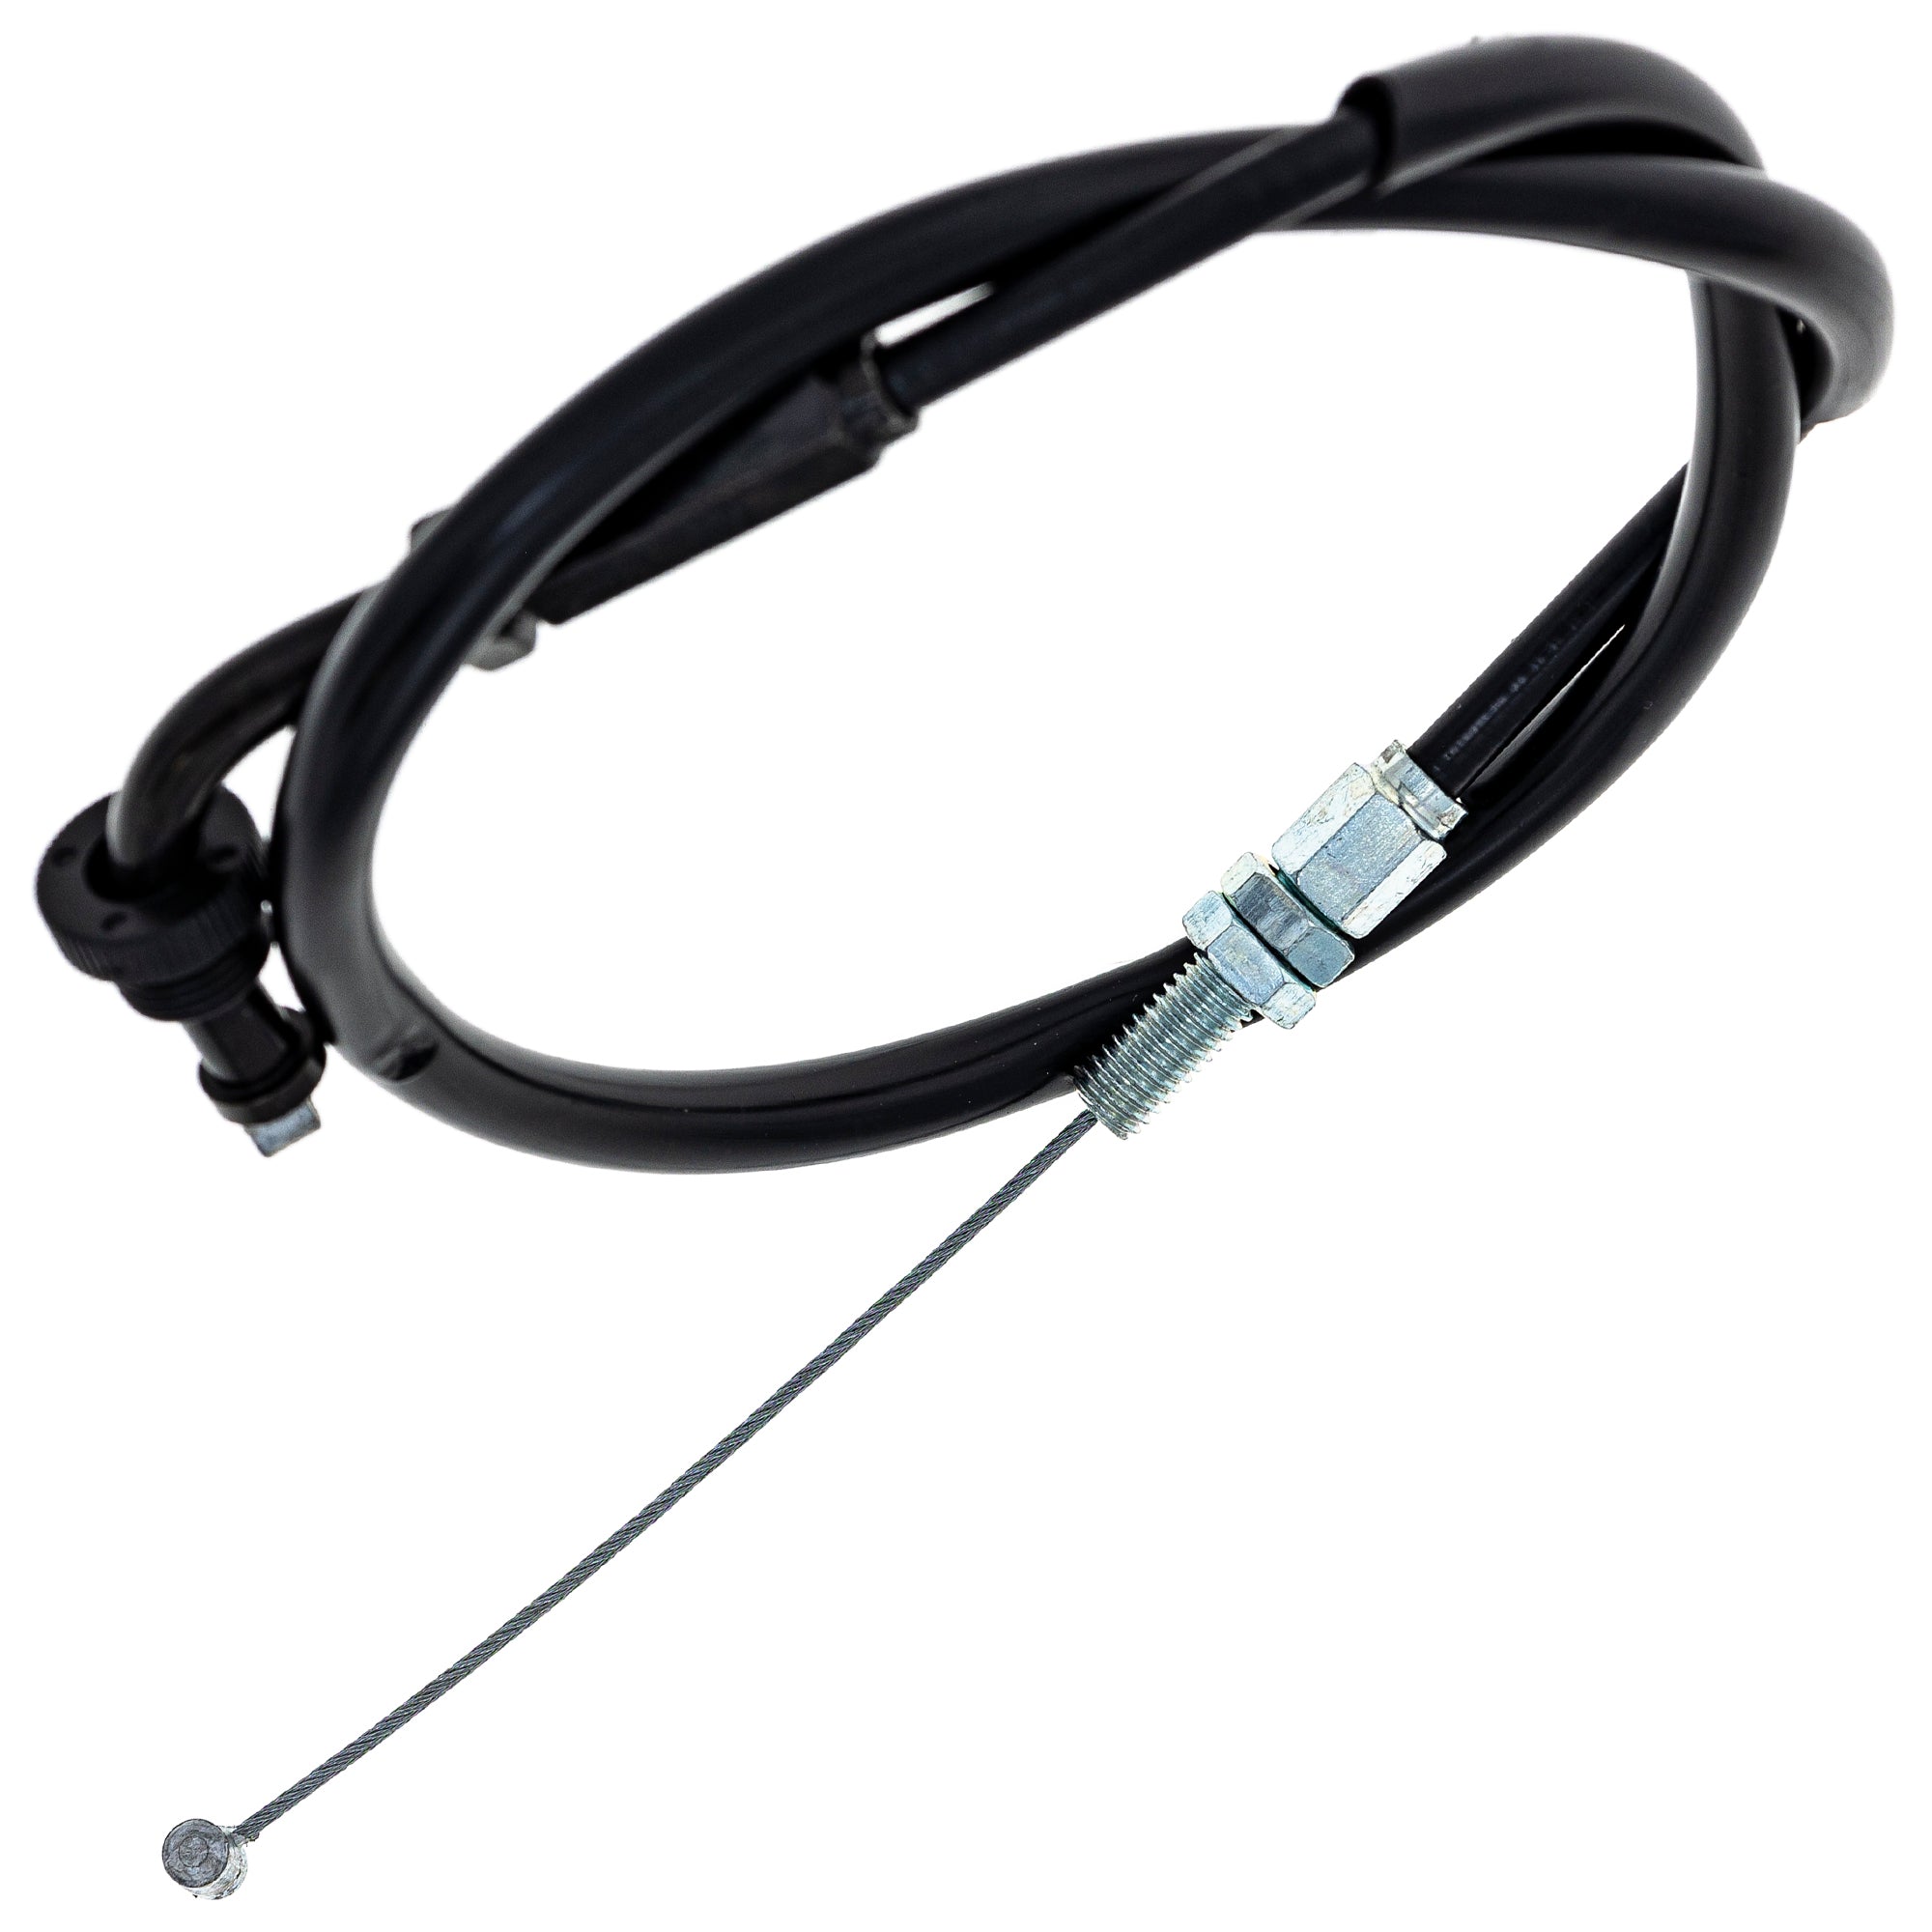 Throttle Cable for Suzuki GSXR1000 GSXR600 GSXR750 58300-35F10